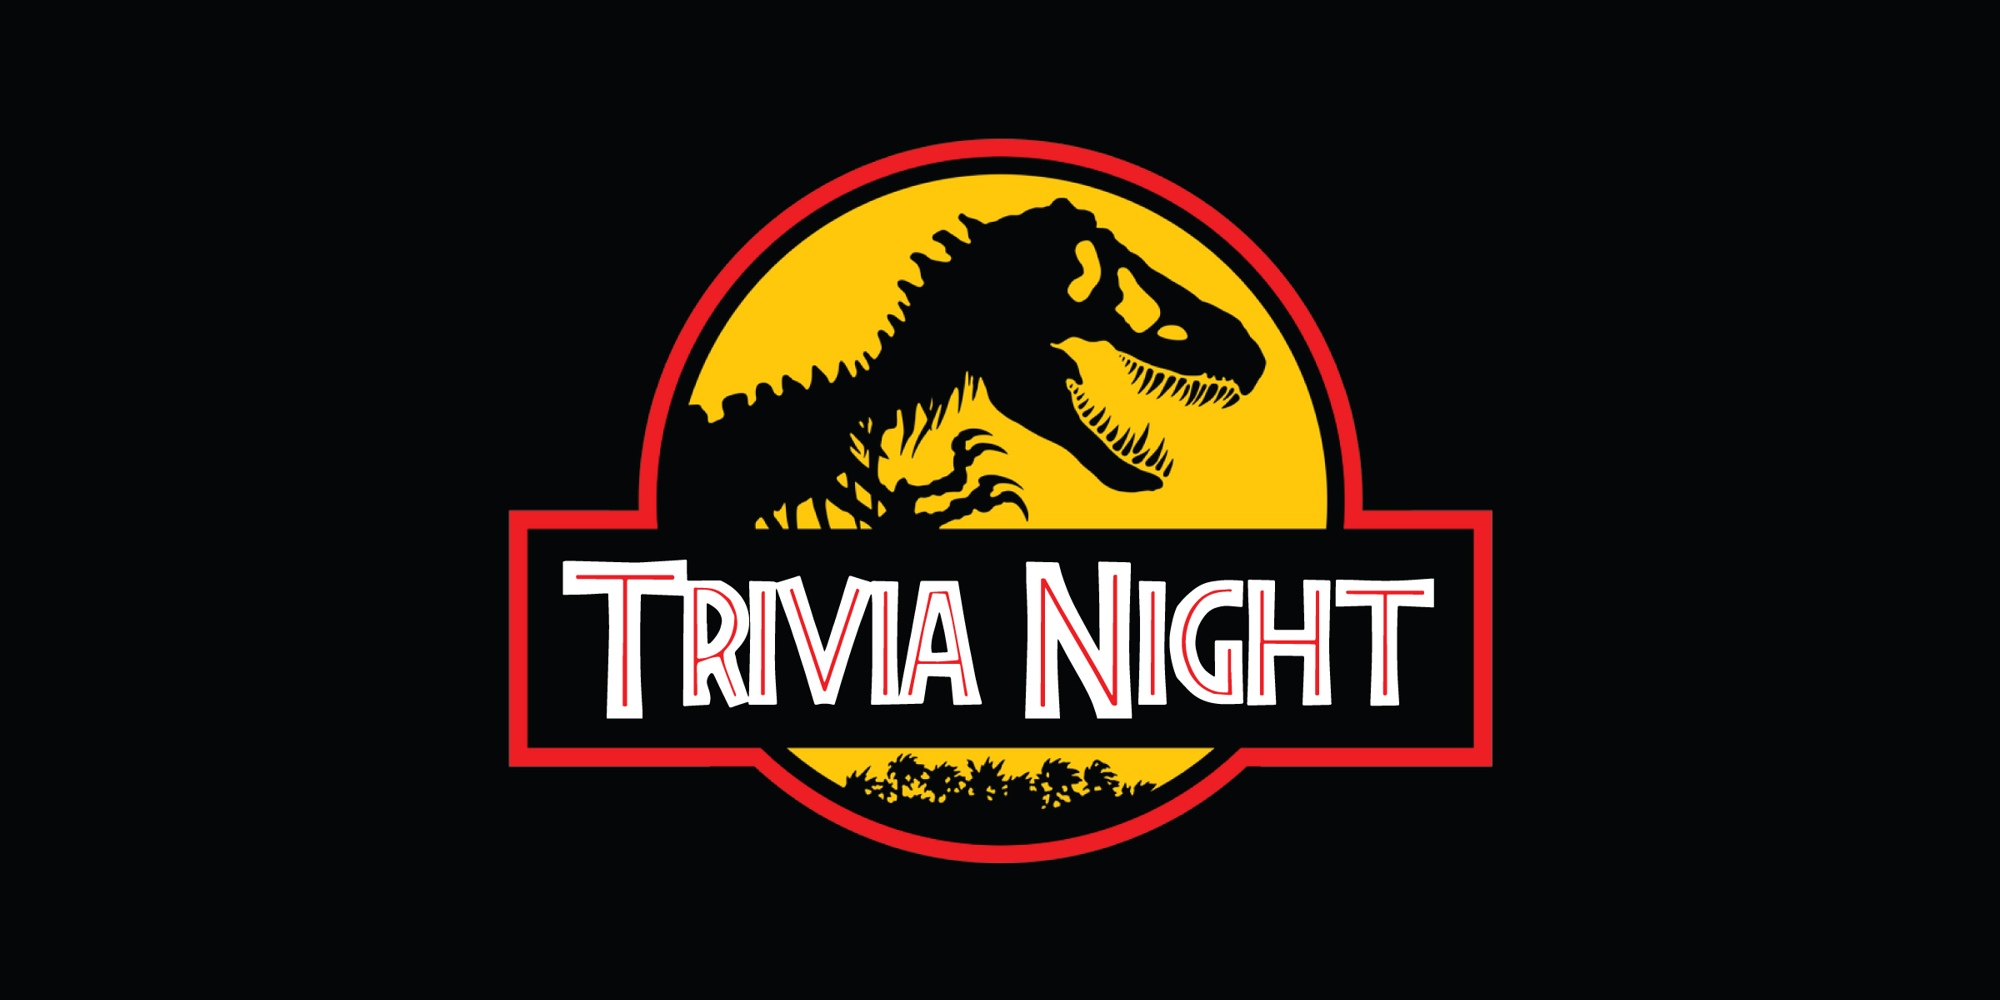 Jurassic Park Trivia Night promotional image